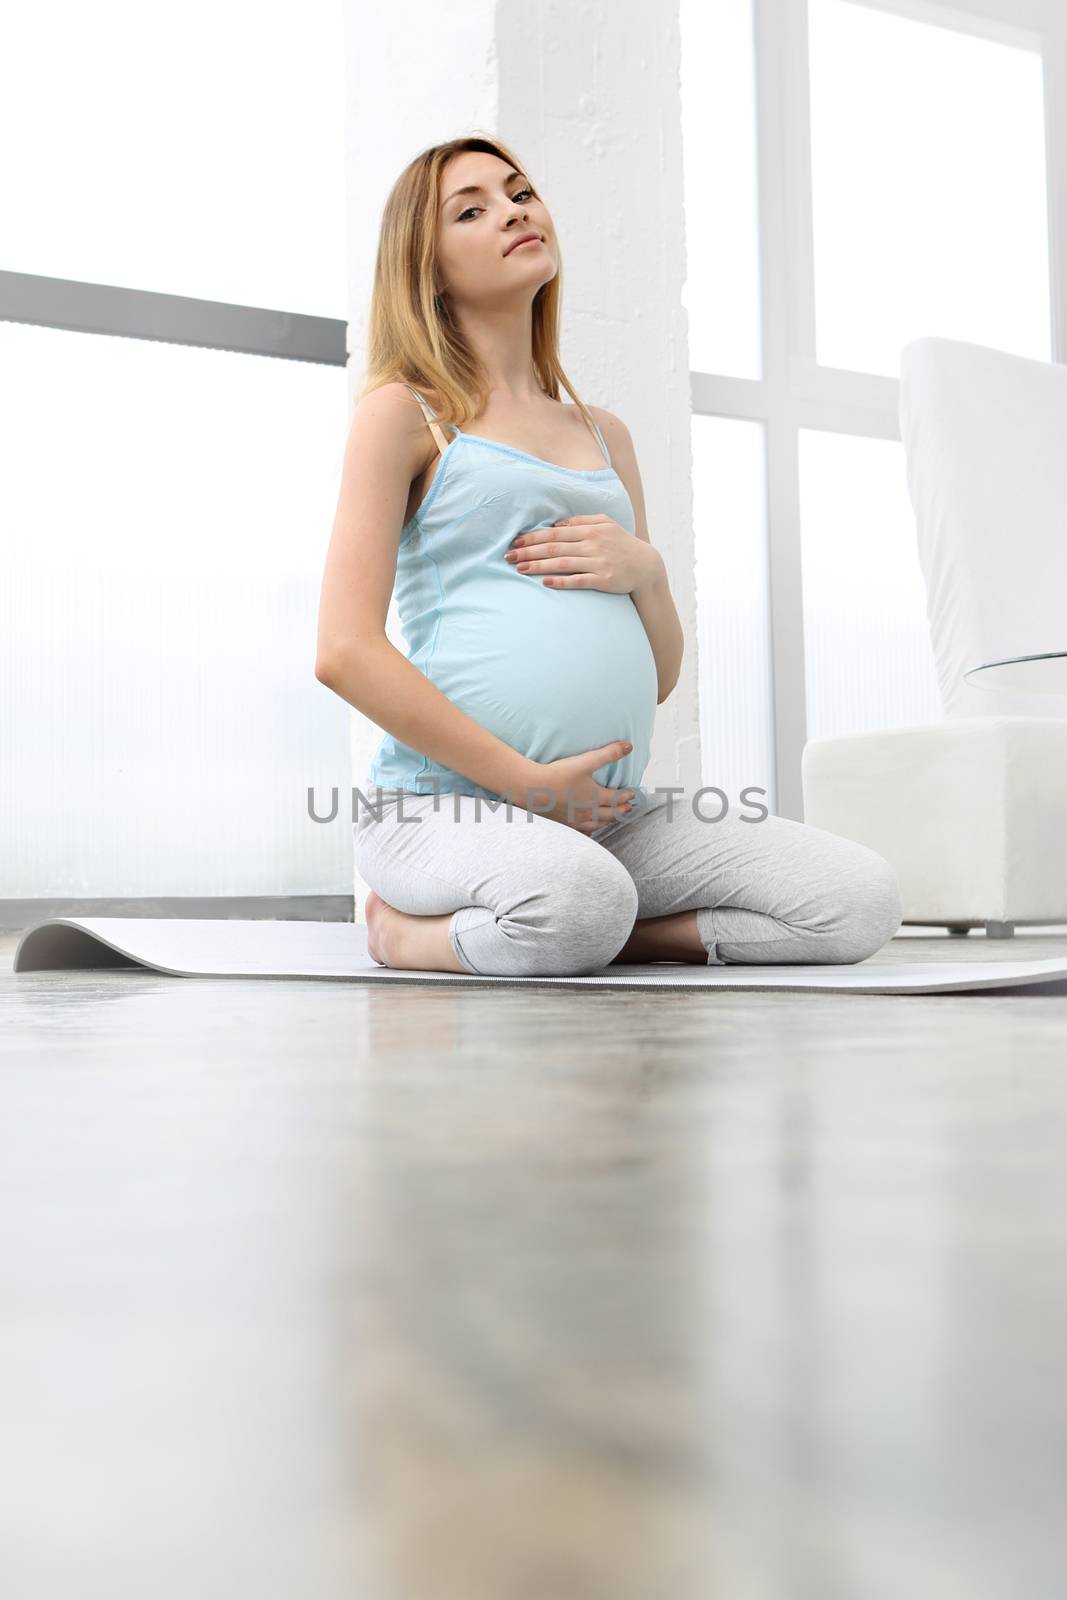 Pregnant woman doing yoga exercise